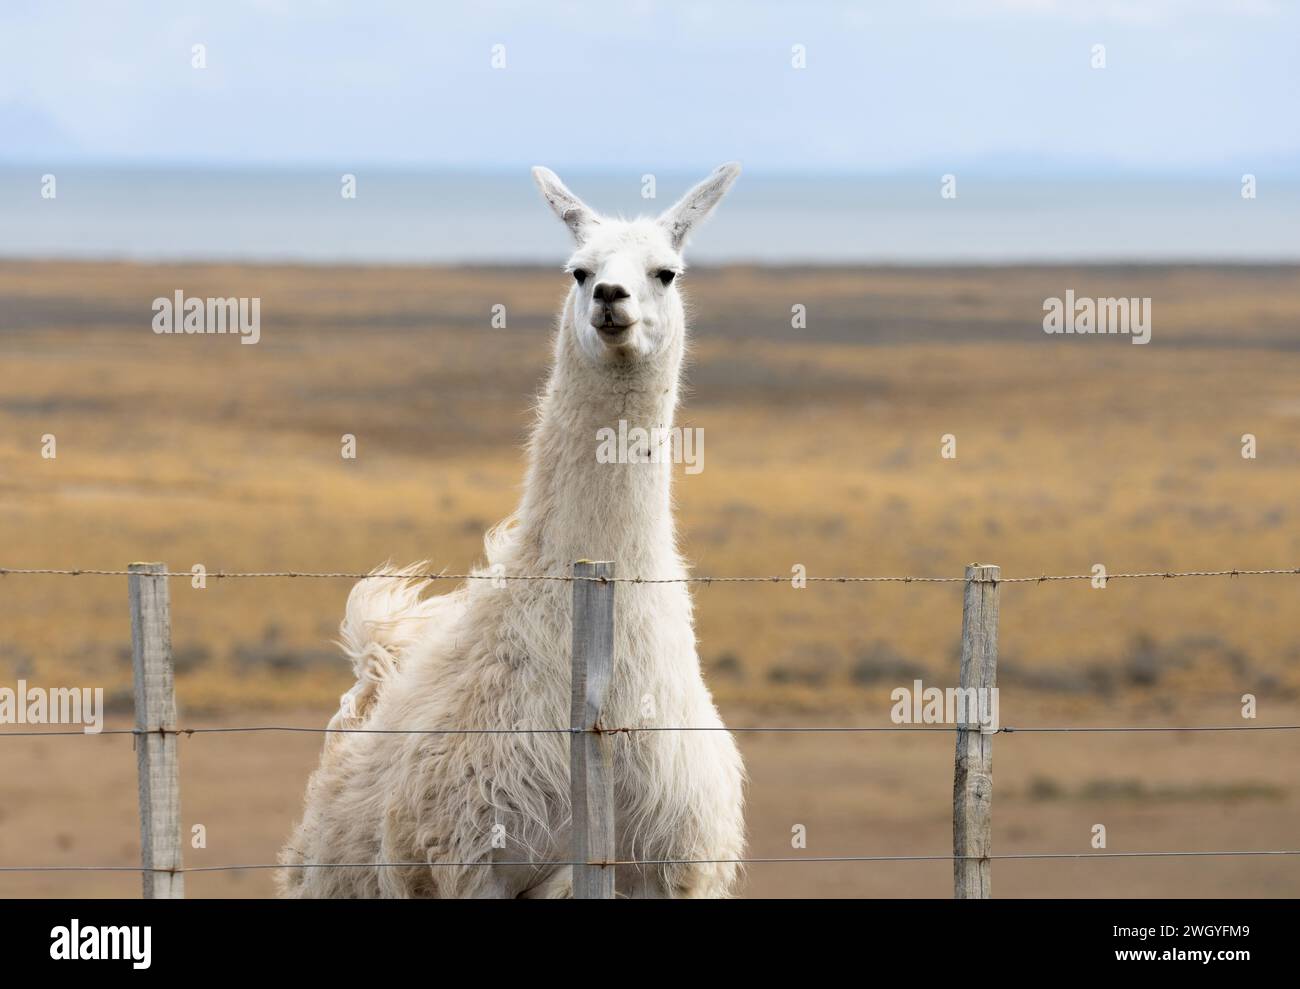 a llama on the countryside, livestock Stock Photo